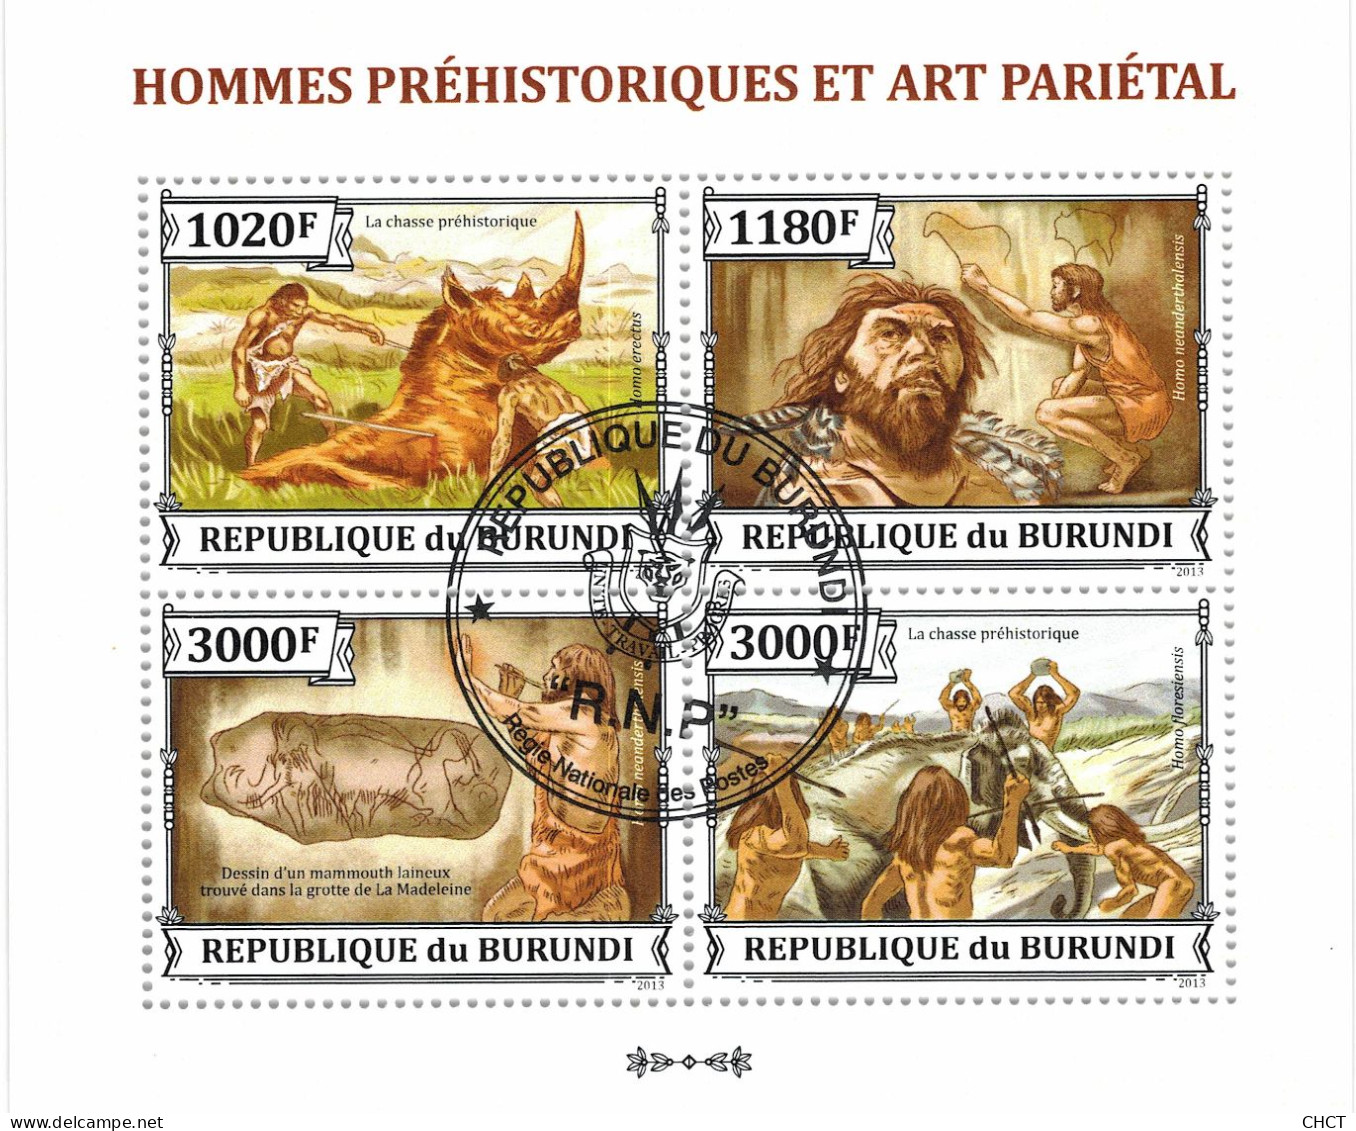 CHCT65 - Prehistoric Humans & Art, History, Stamp Mini Sheet, Used CTO, 2013, Burundi - Usati